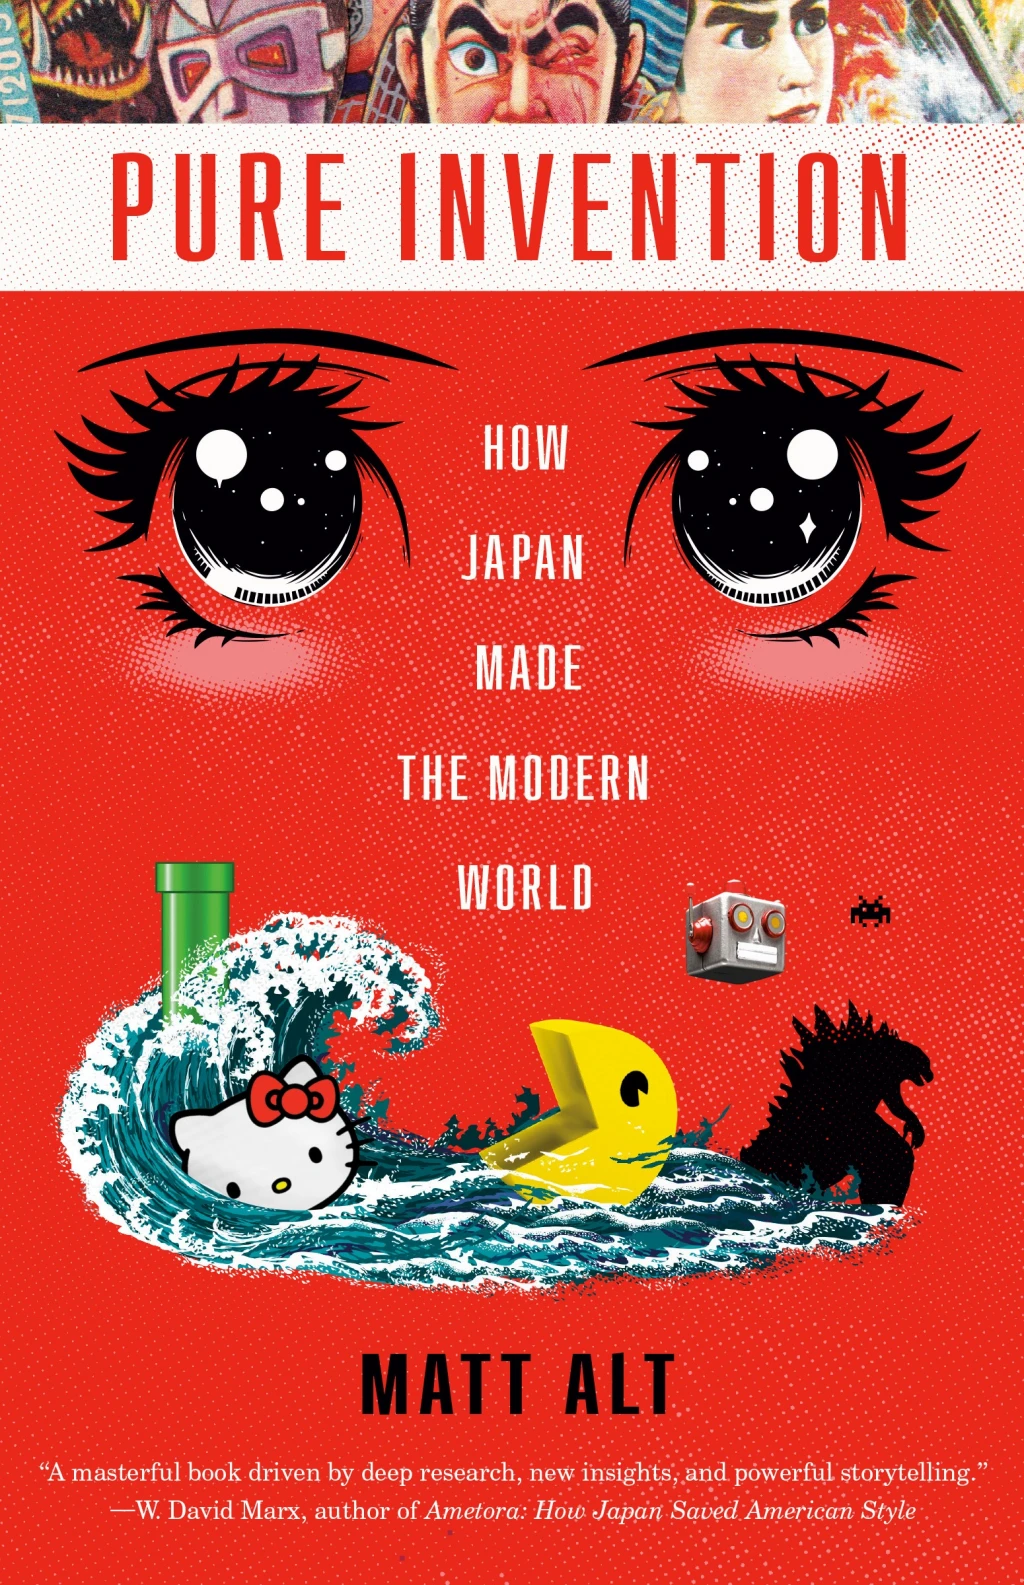 Pure Invention book: How Japan Made the Modern World by Matt Alt